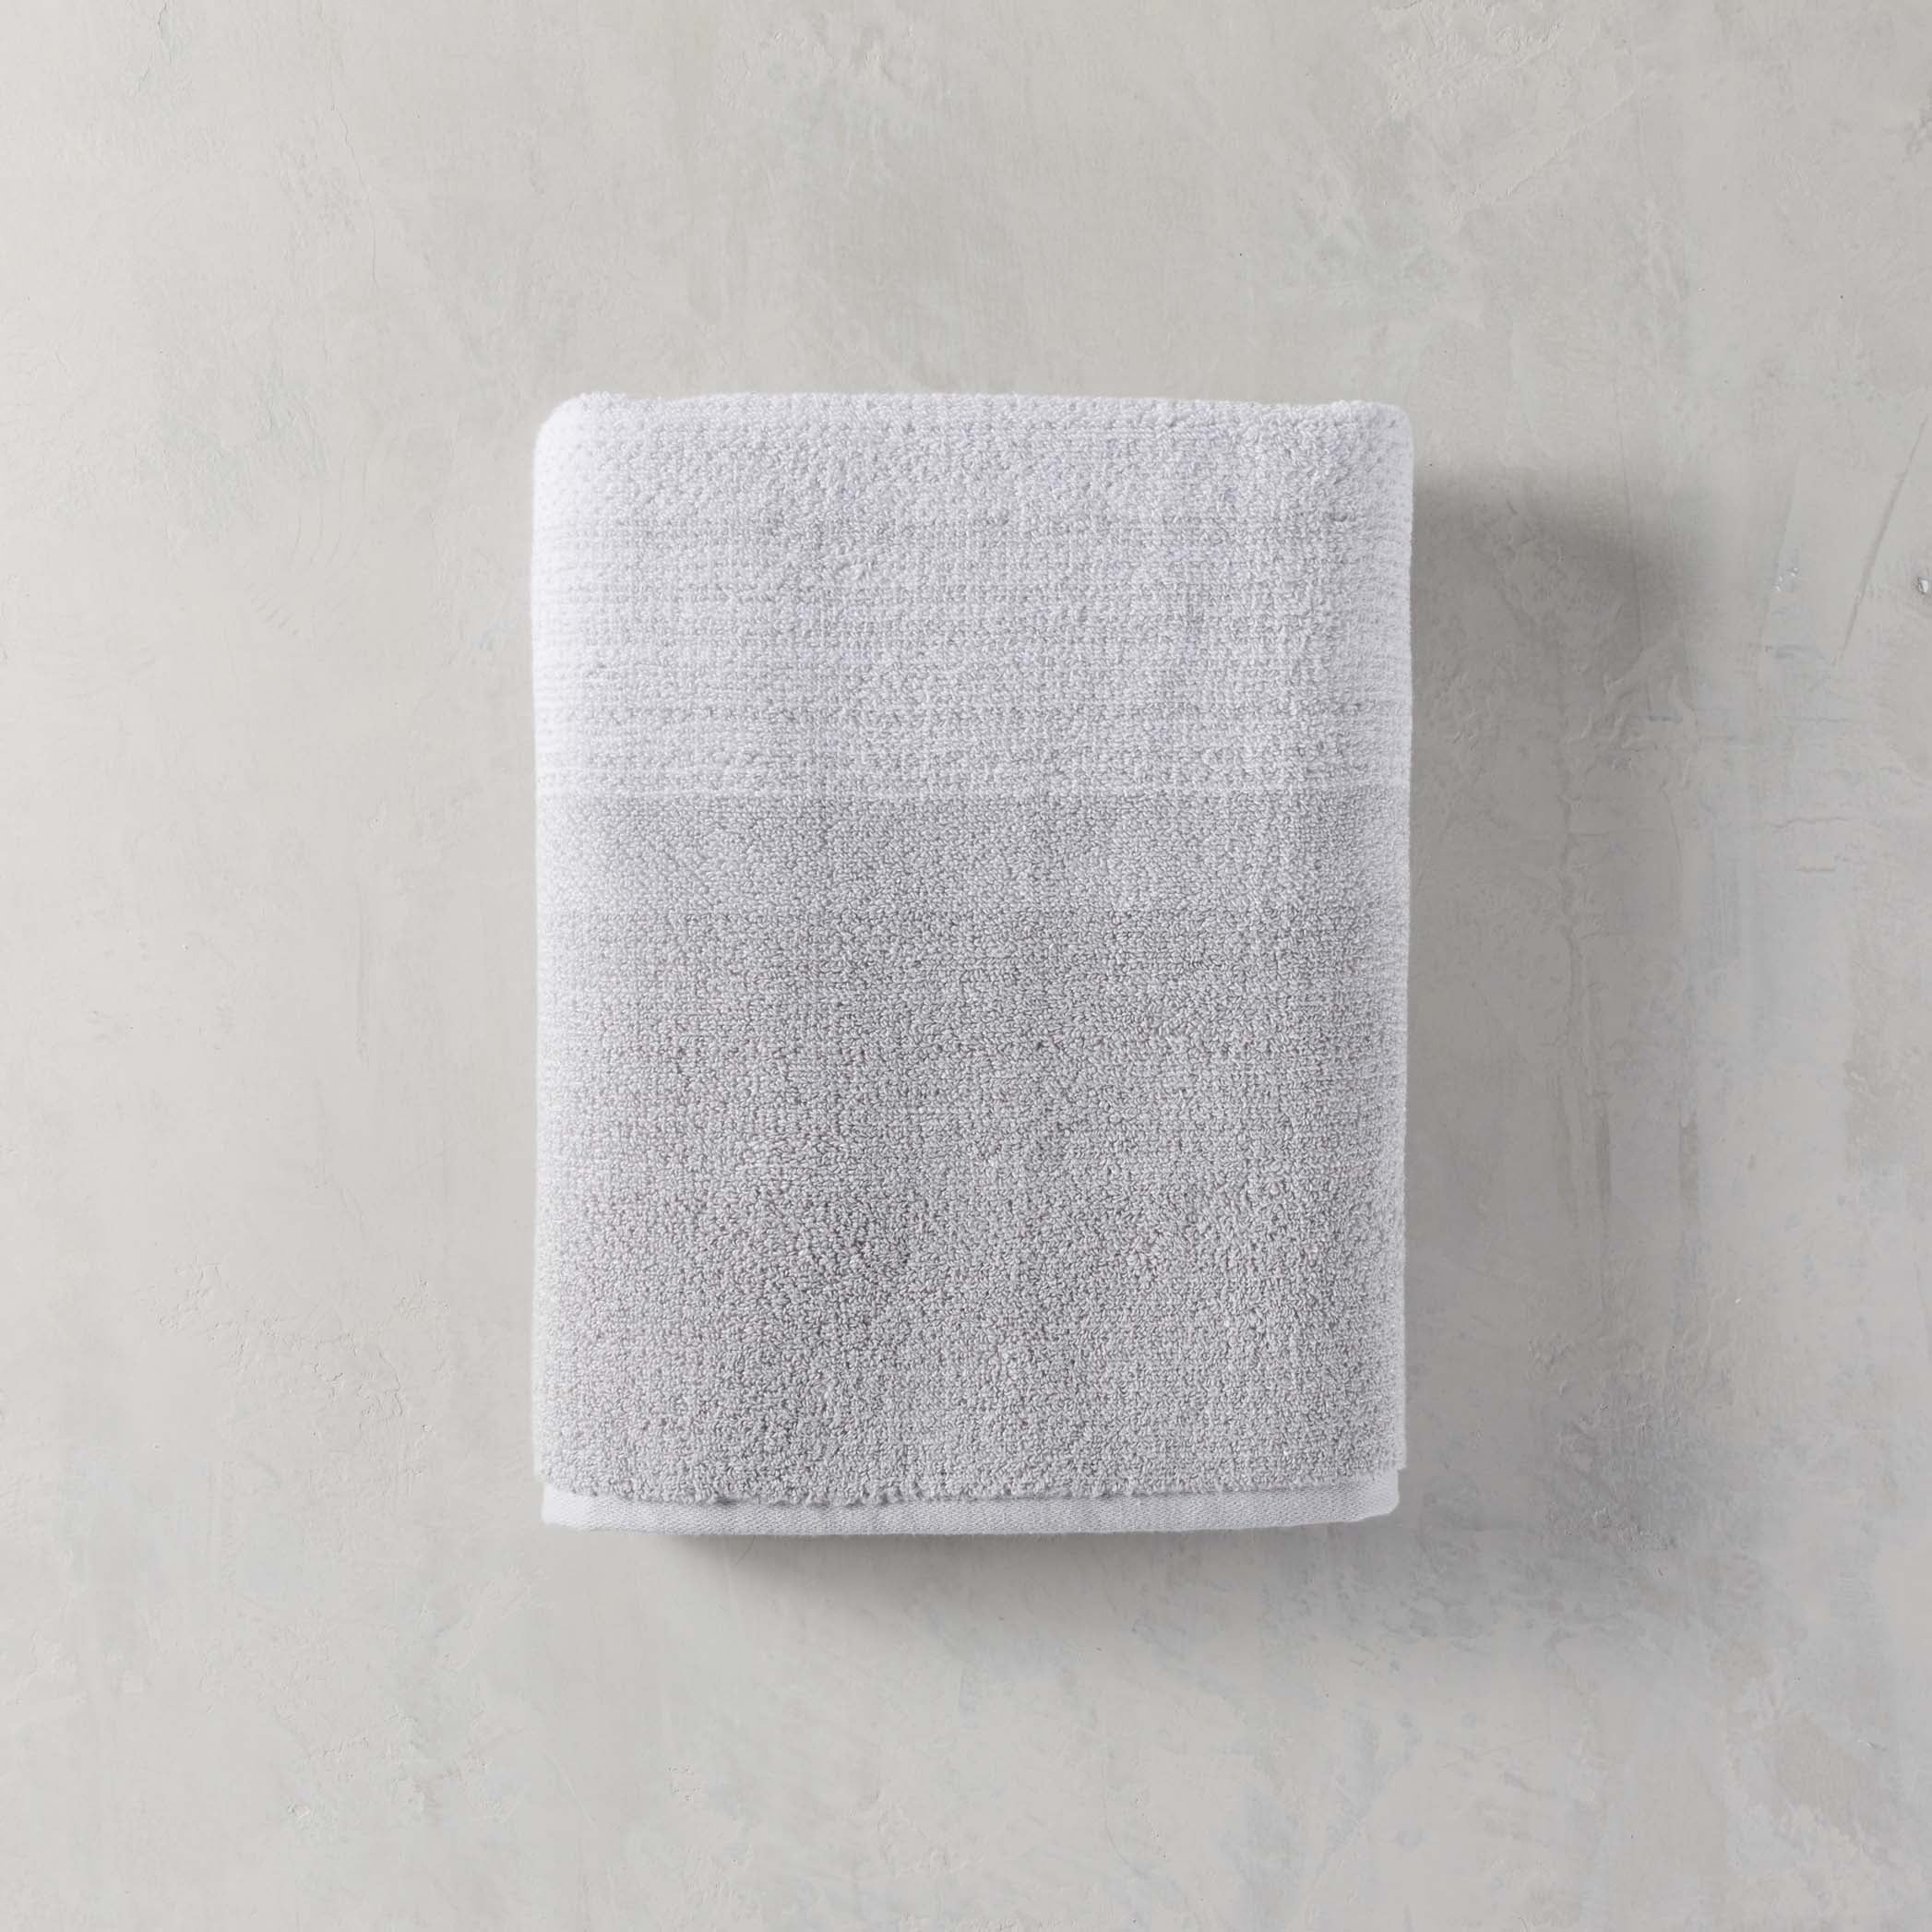 Under The Canopy Textured Organic Towel - Light Taupe Light Taupe / 6-Piece Bath Towel Set Bath